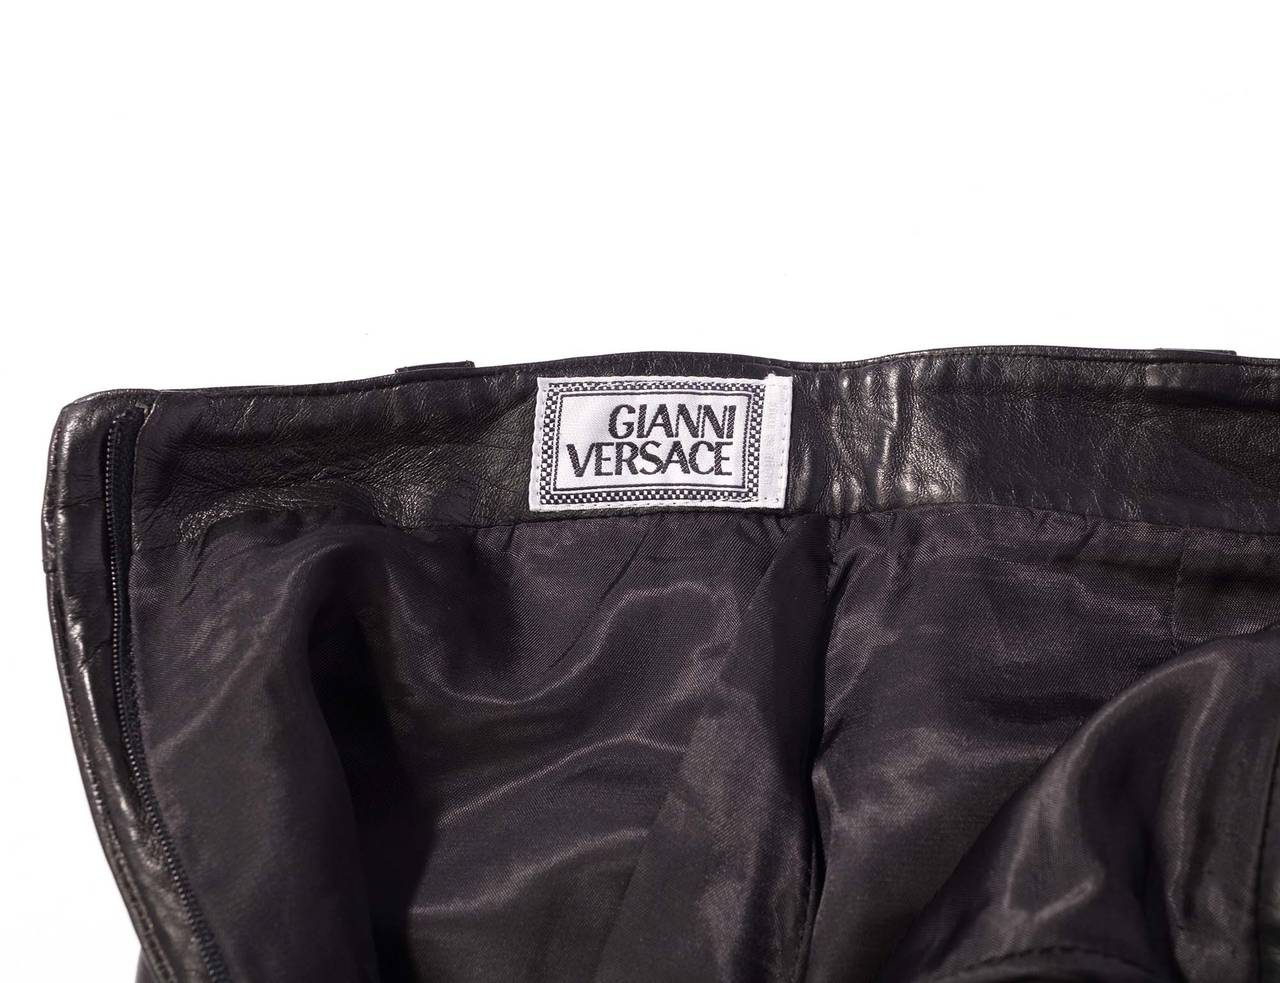 Gianni Versace Vintage leather studded high waisted pants 1